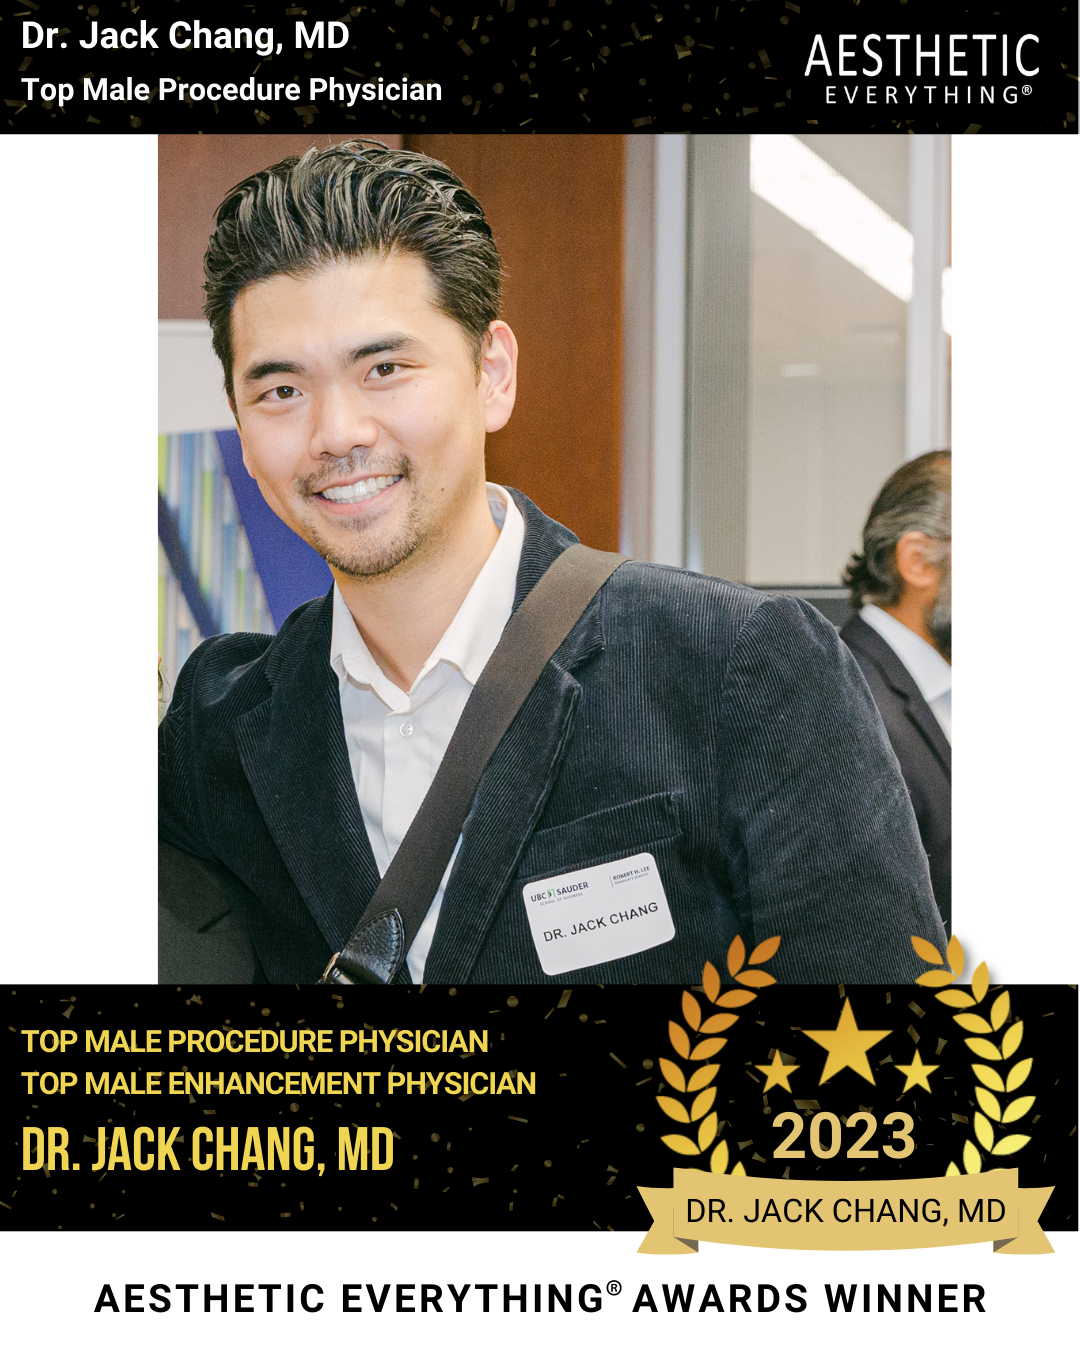 Dr. Jack Chang, MD